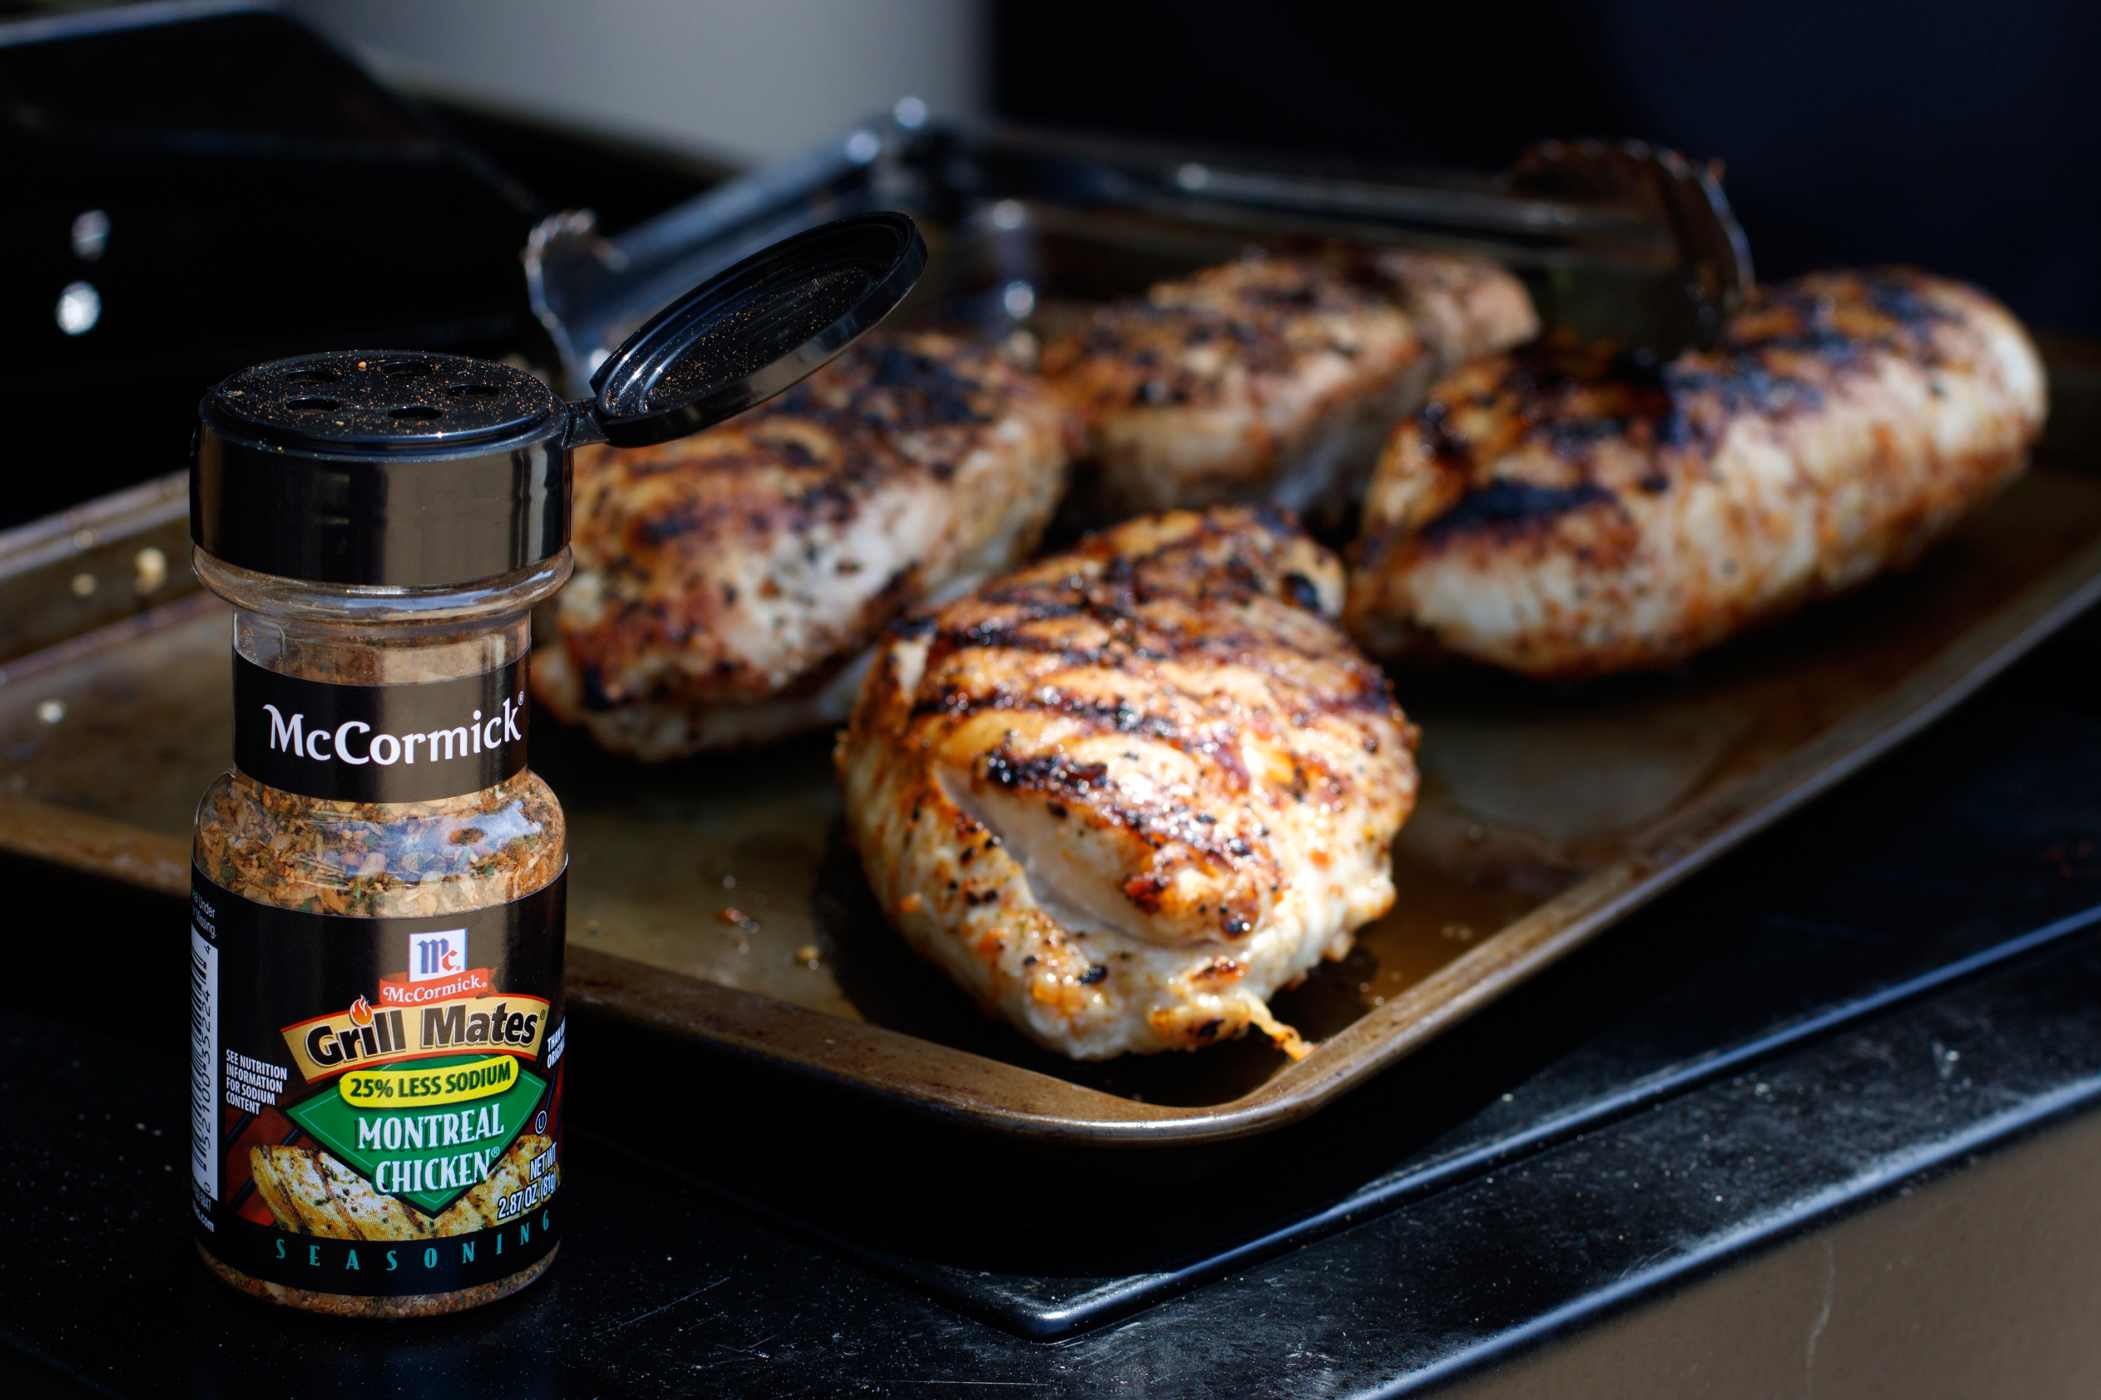 McCormick Grill Mates 25% Less Sodium Montreal Chicken Seasoning; image 4 of 4